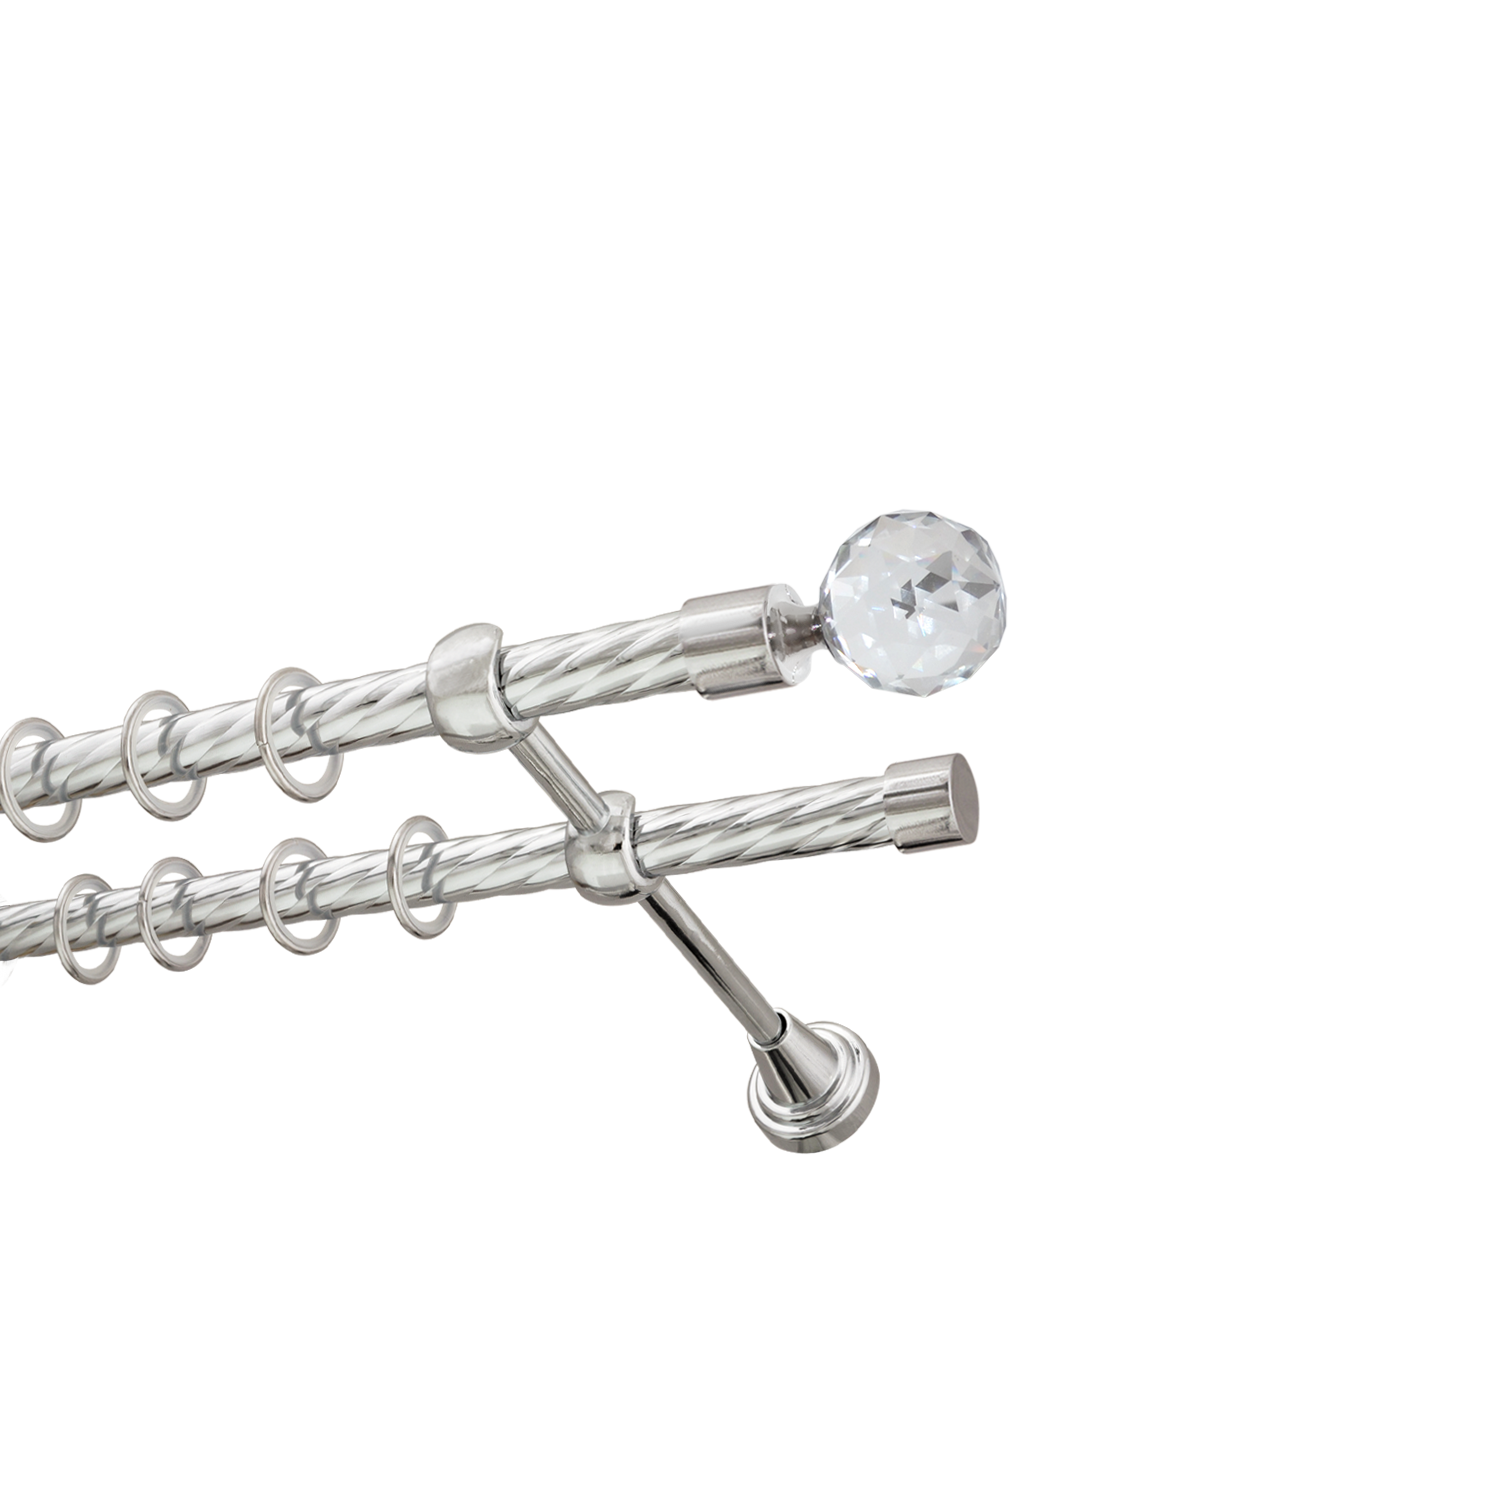 Металлический карниз для штор Карат, двухрядный 16/16 мм, серебро, витая штанга, длина 180 см - фото Wikidecor.ru